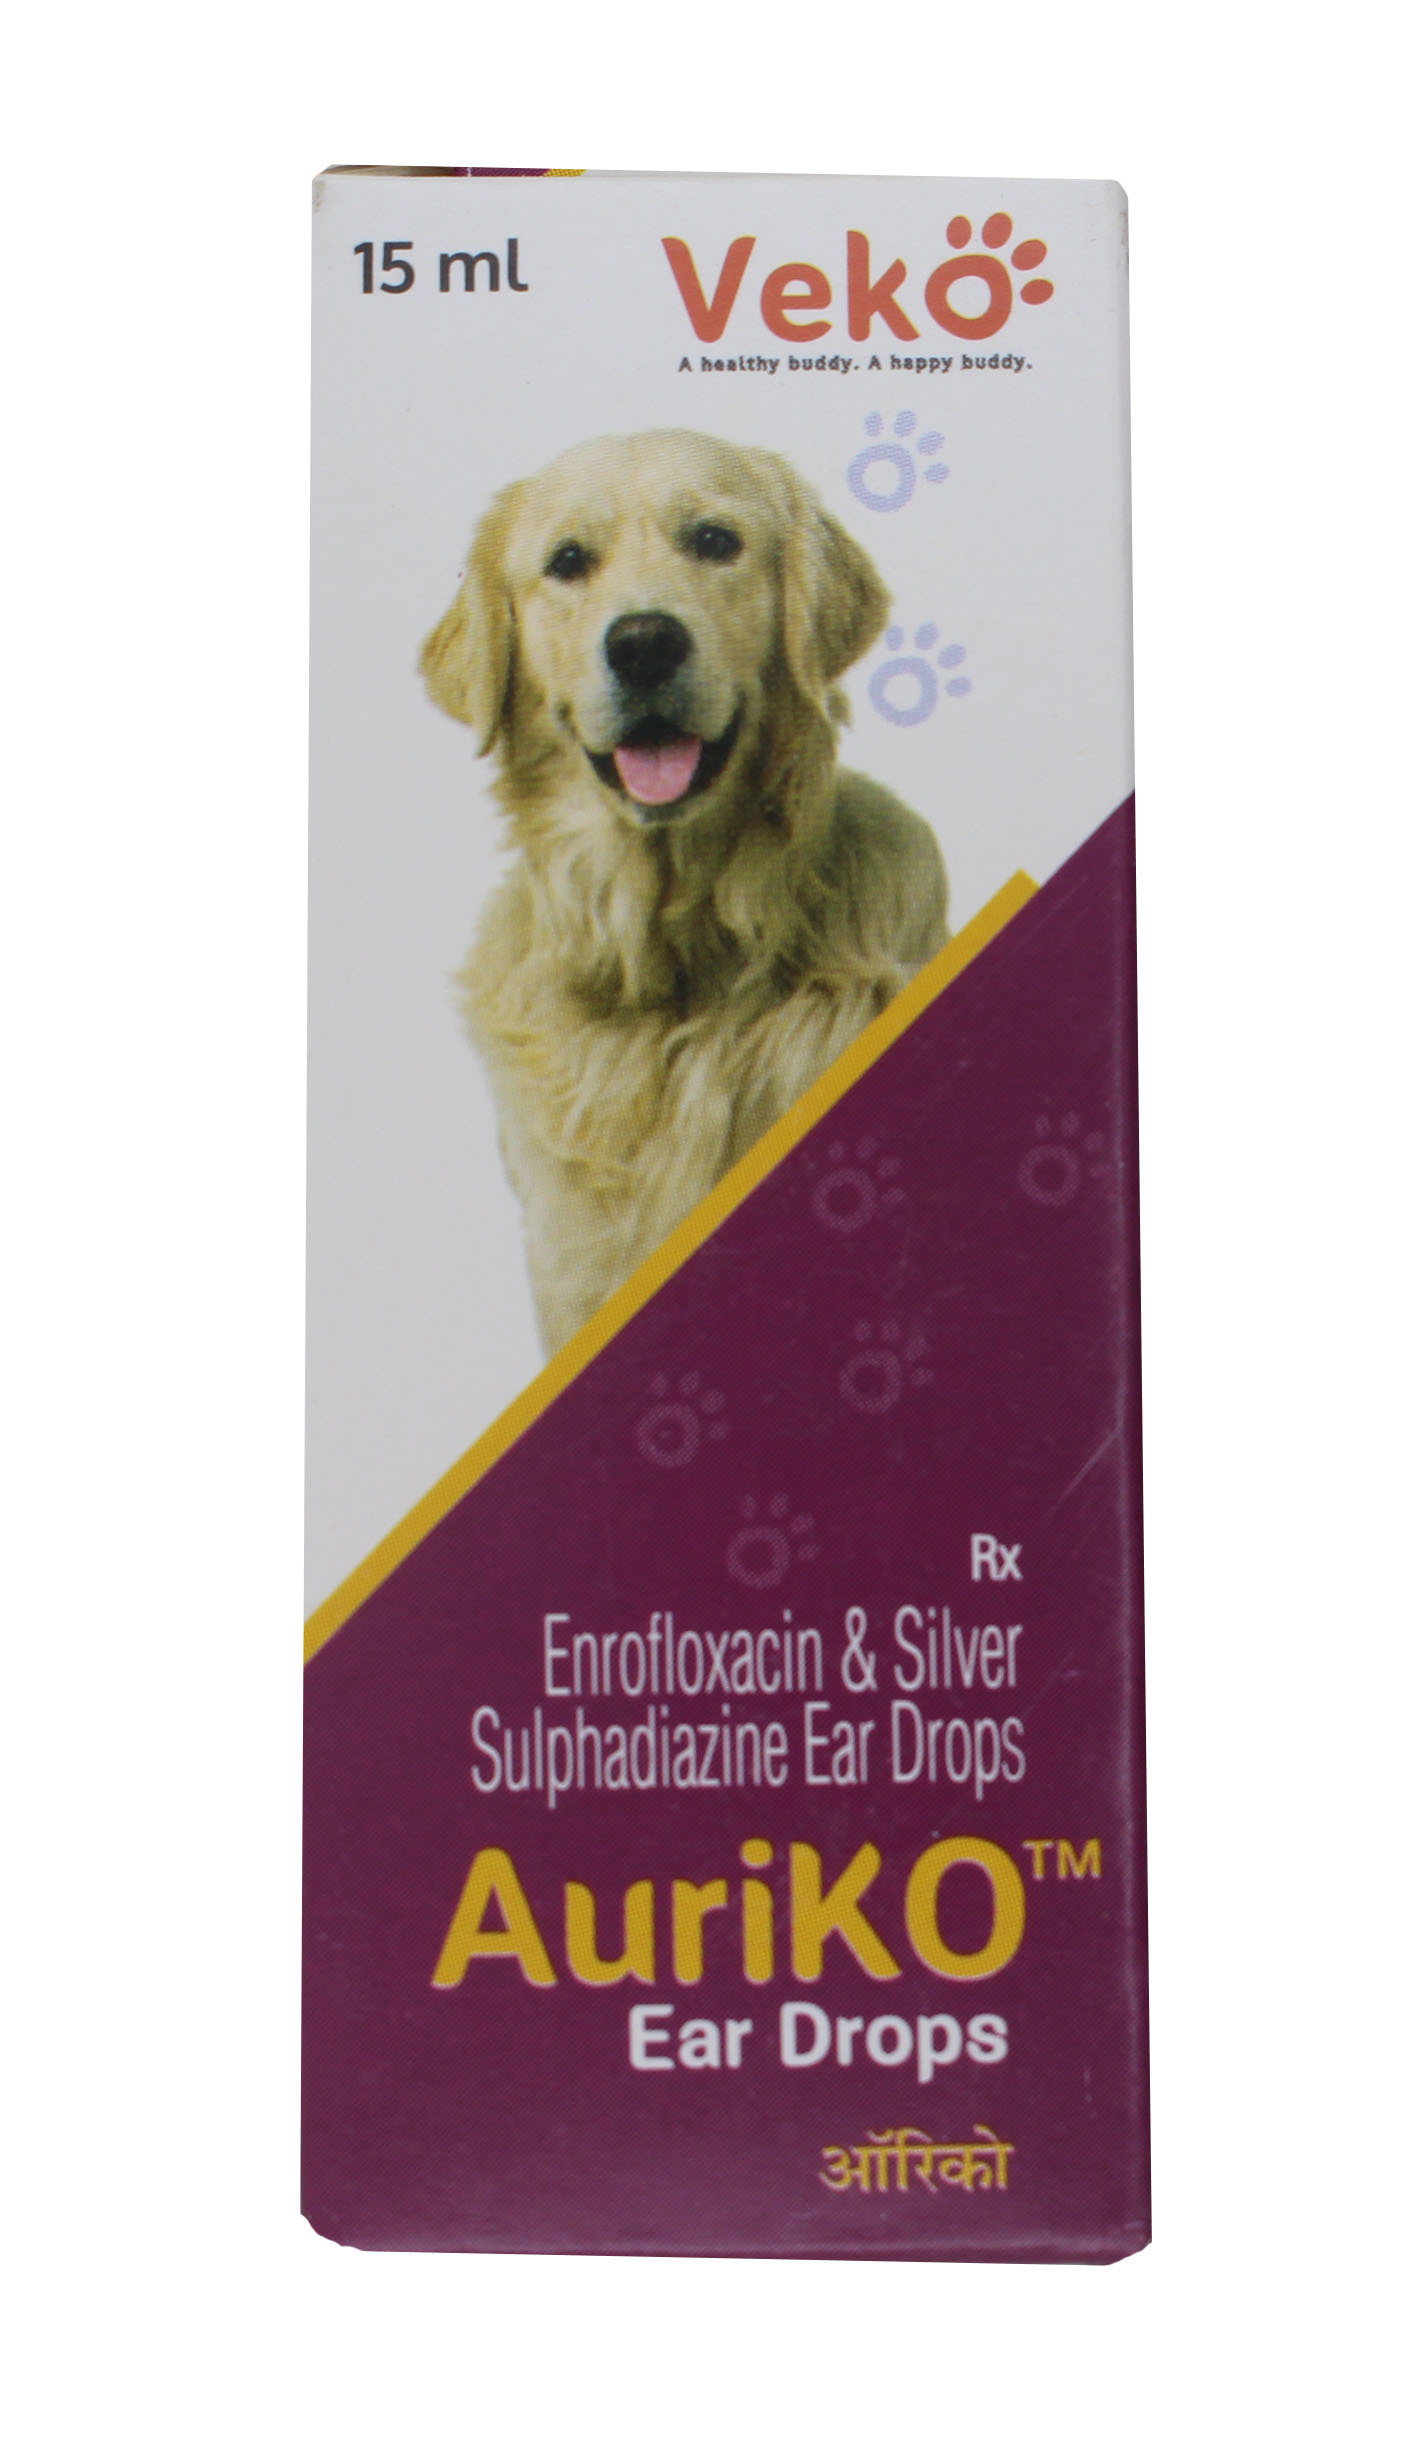 Auriko Ear Drops-ENROFLOXACIN 5MG+SULPHADIAZINE